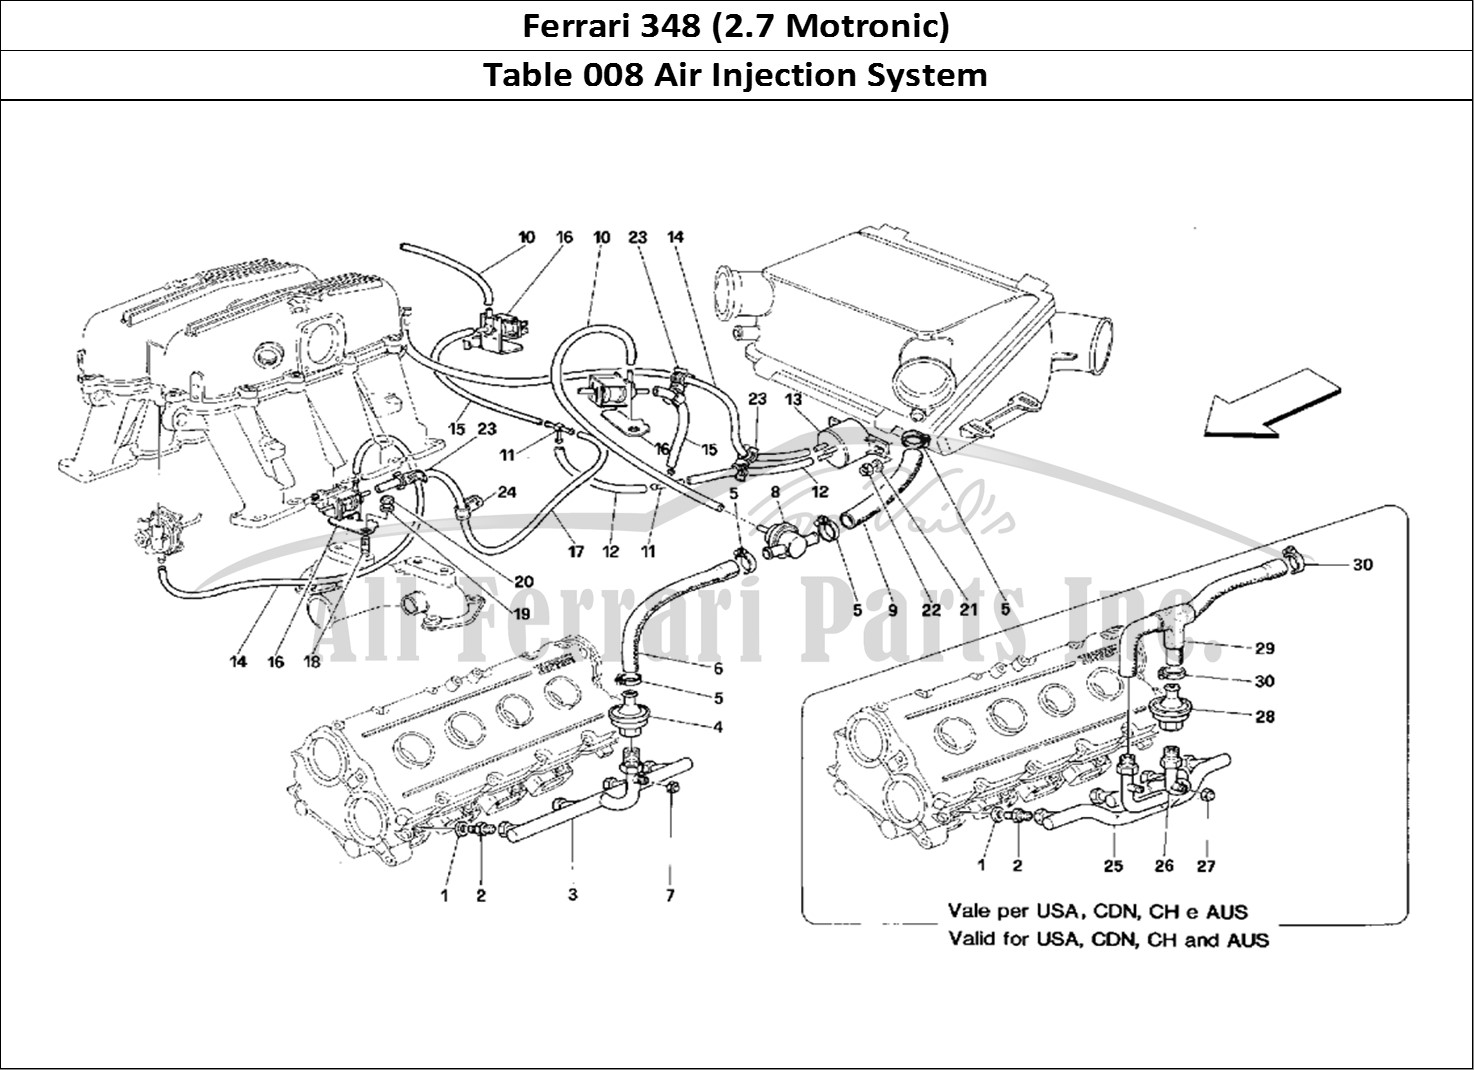 Ferrari Parts Ferrari 348 (2.7 Motronic) Page 008 Air Injection Device